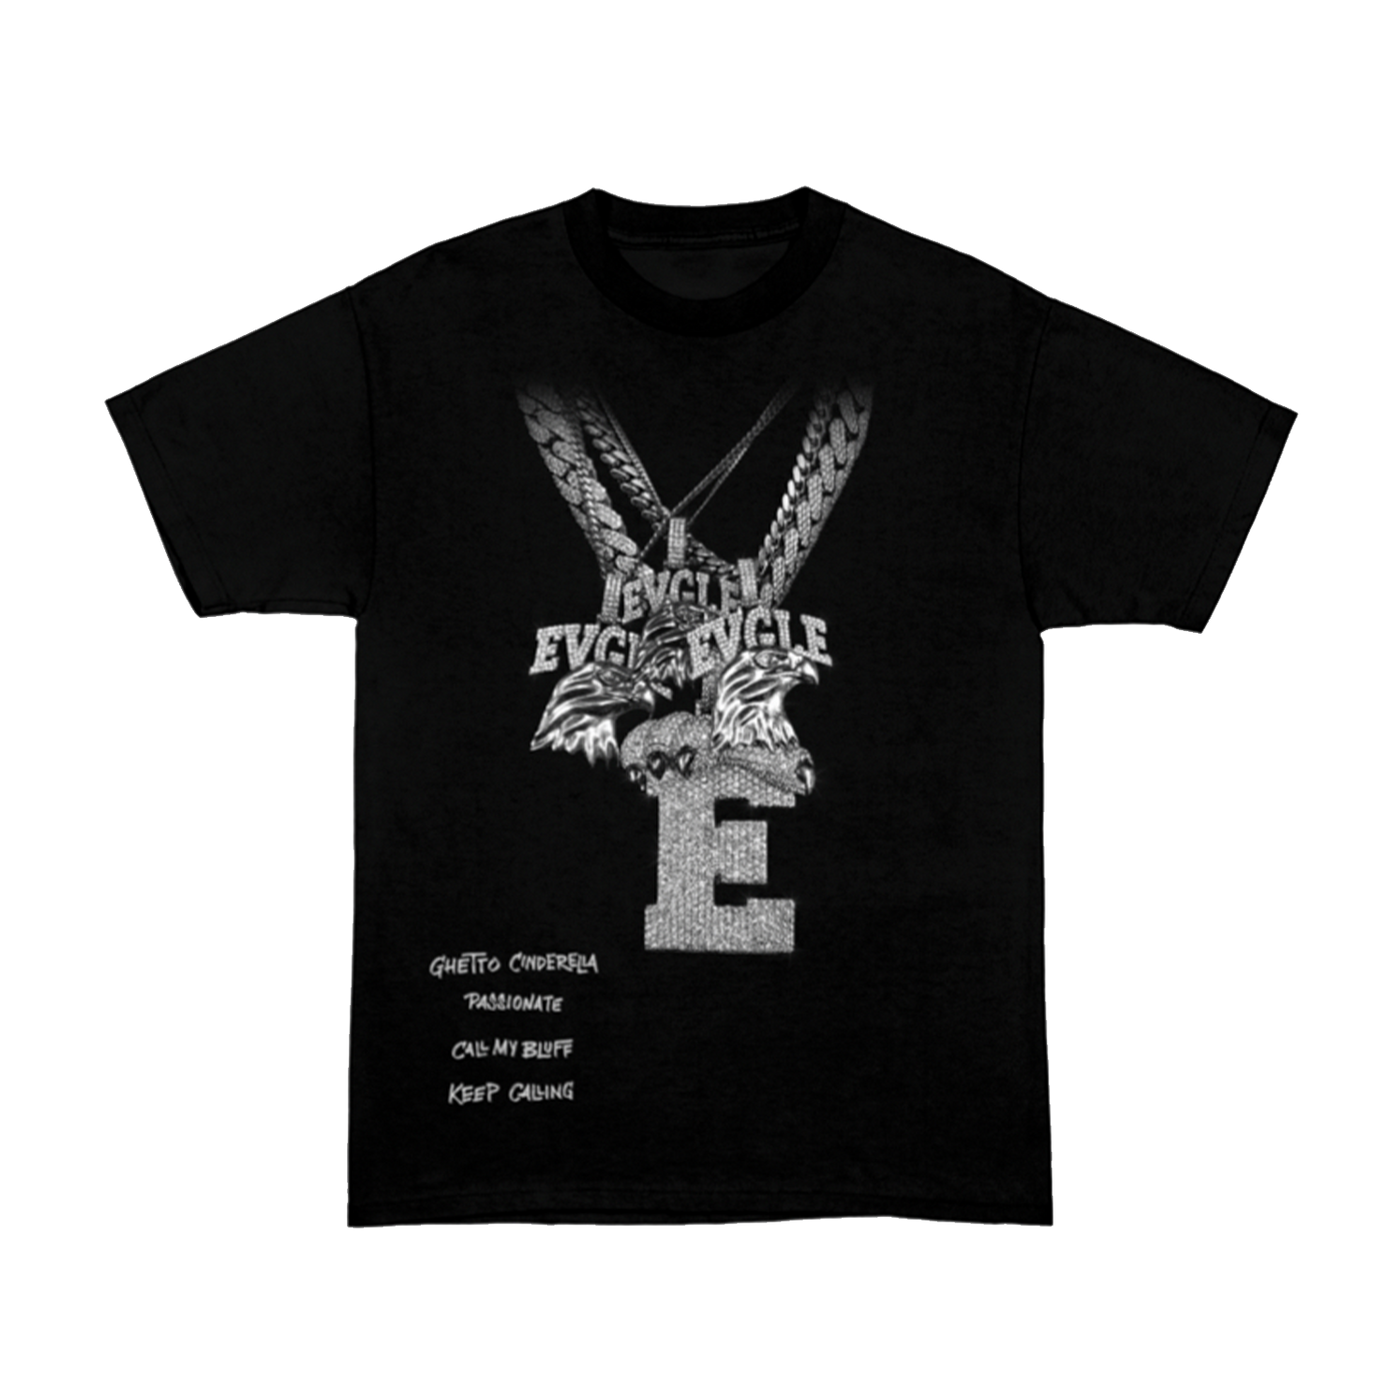 EVGLE Chains T-Shirt